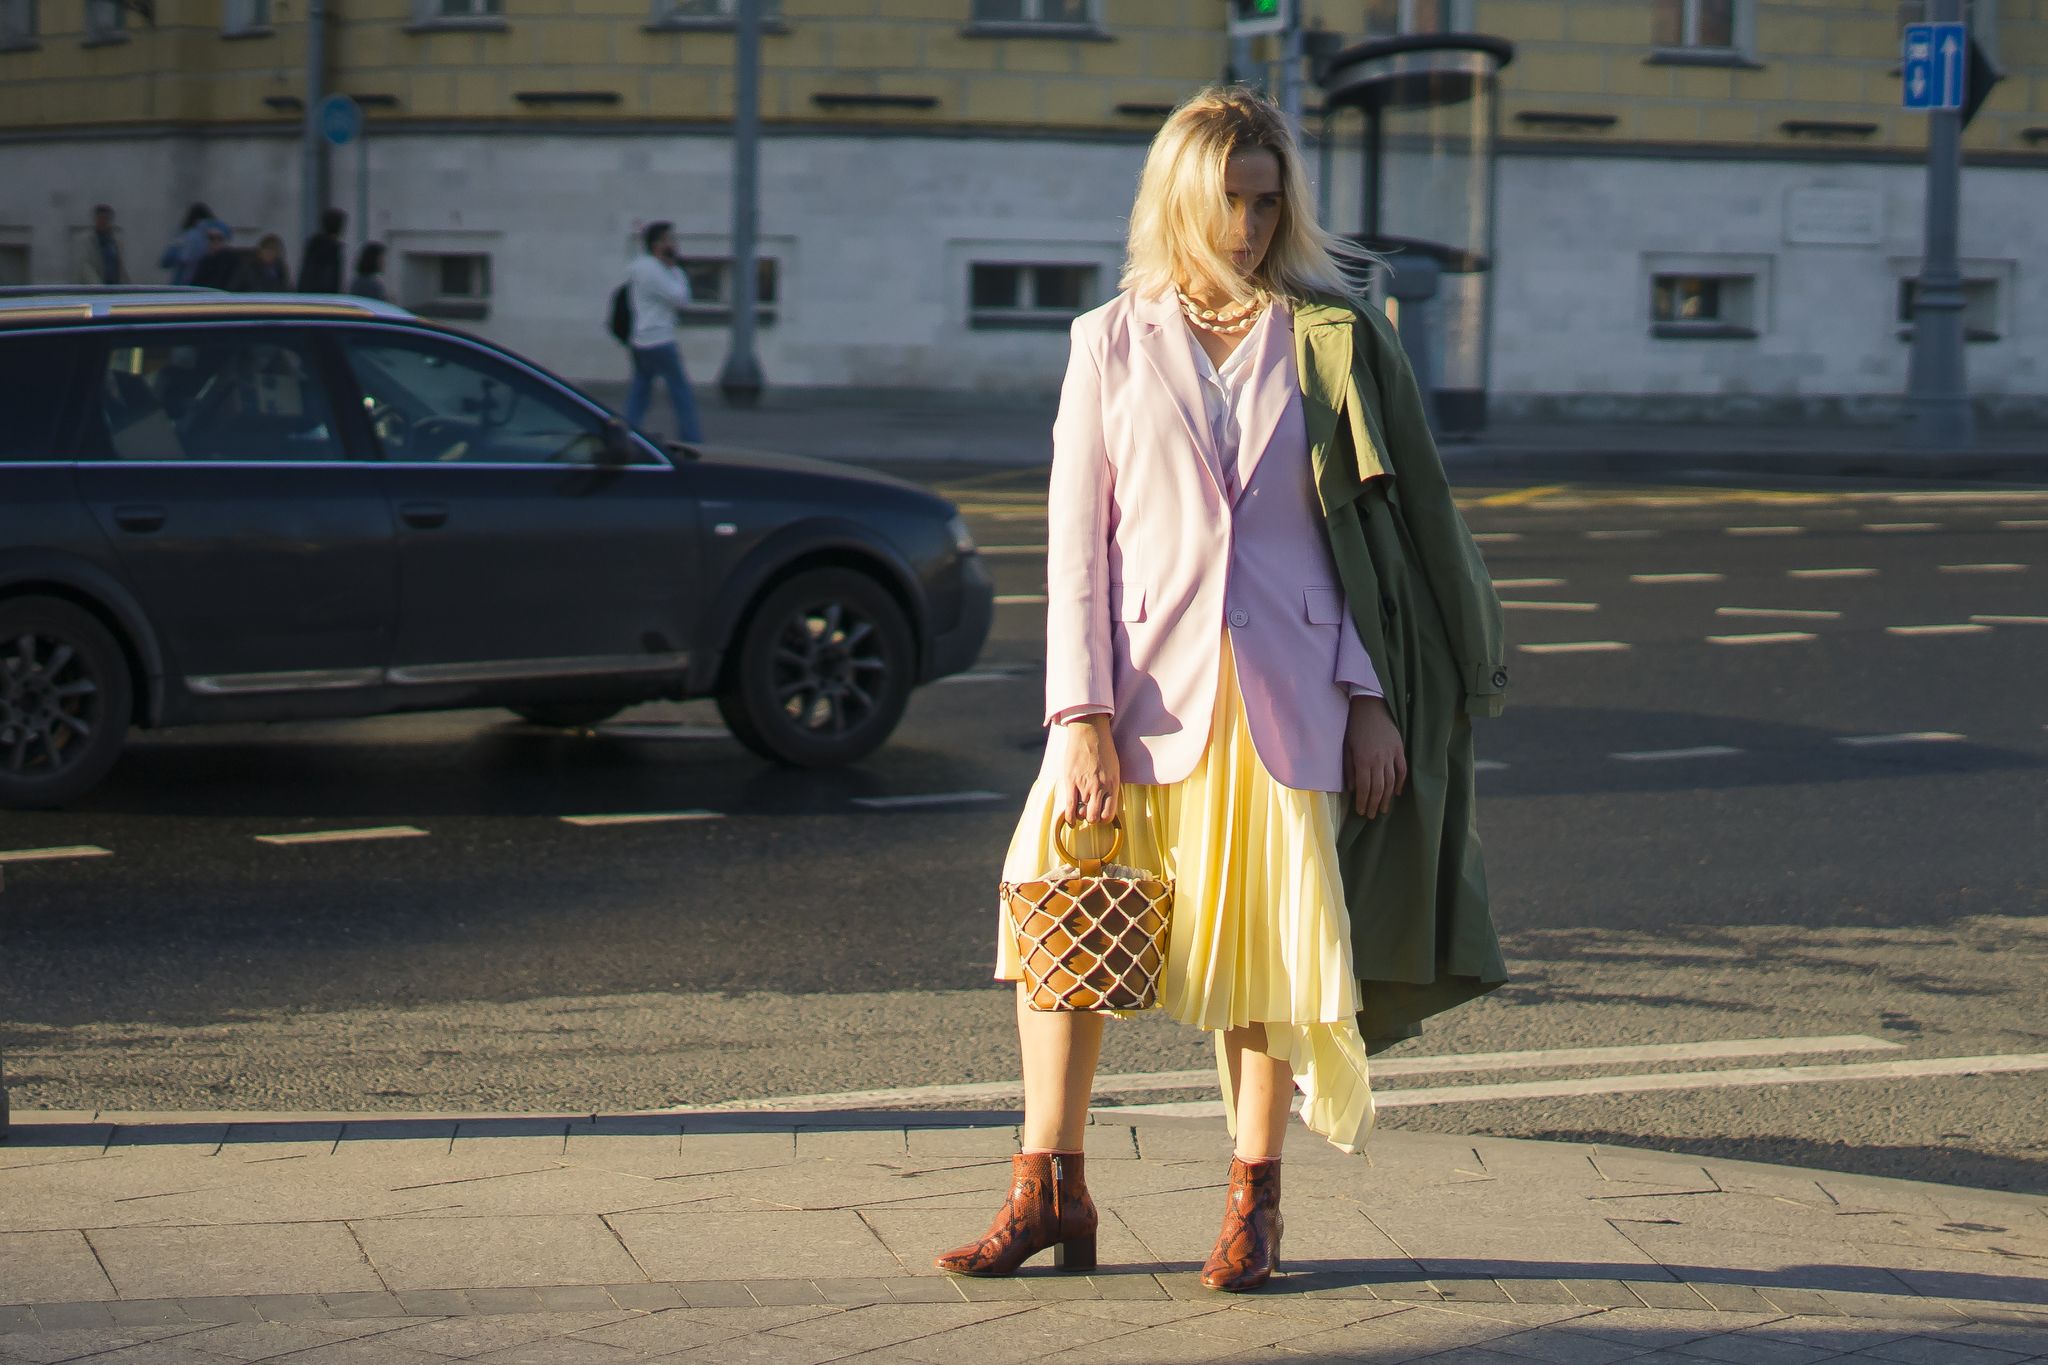 street style lilac blazer yellow skirt